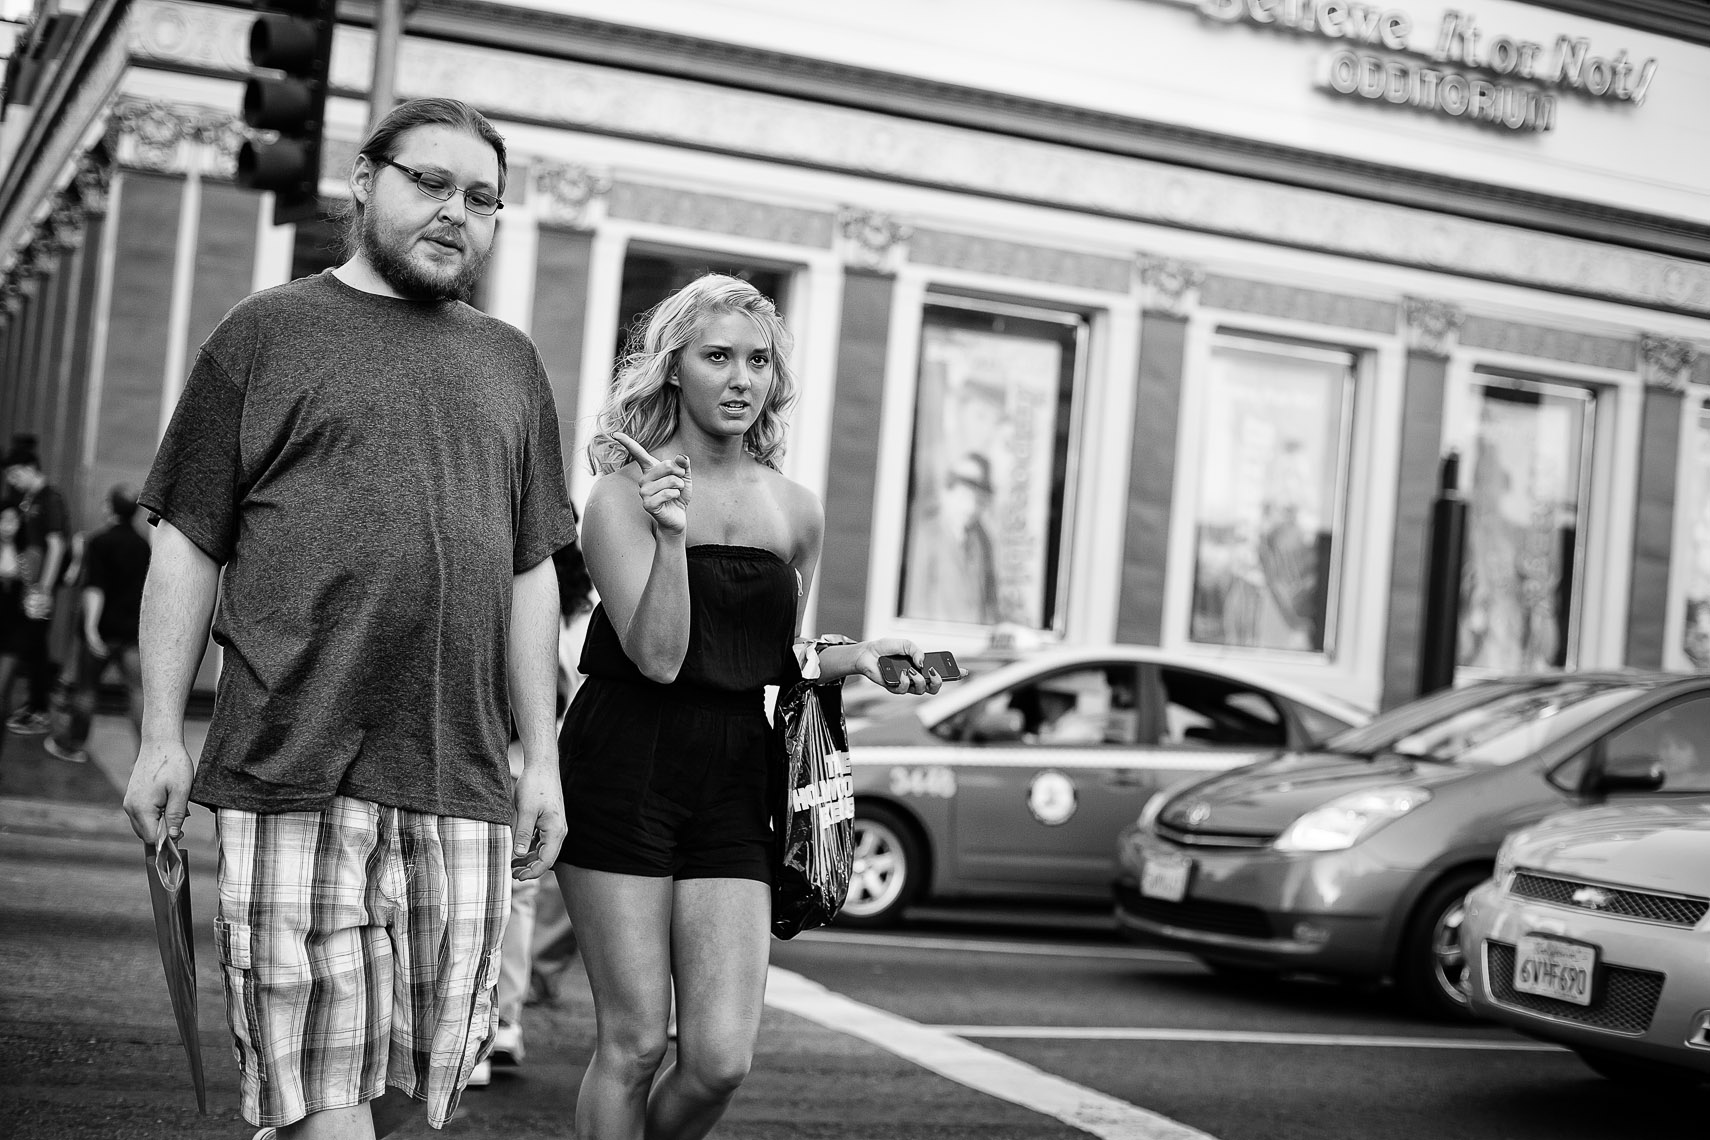 Drongo-Photo-LA-Street-Photographer-Jeff-Drongowski-Hollywood-23.jpg